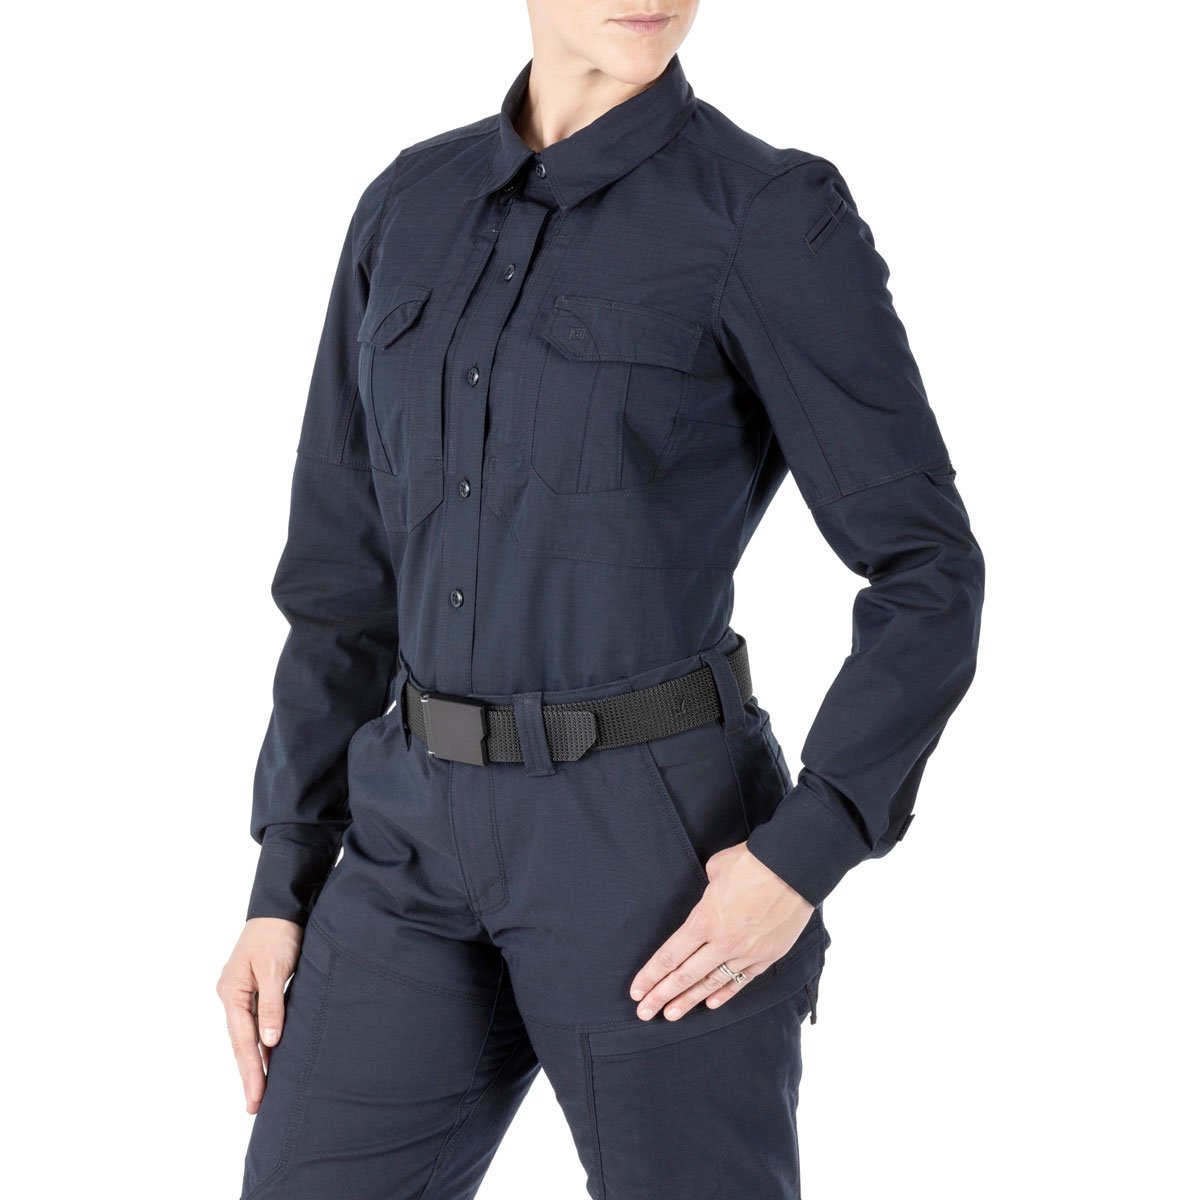 5.11 Tactical Women's Stryke Long Sleeve Shirt Dark Navy Shirts 5.11 Tactical Tactical Gear Supplier Tactical Distributors Australia